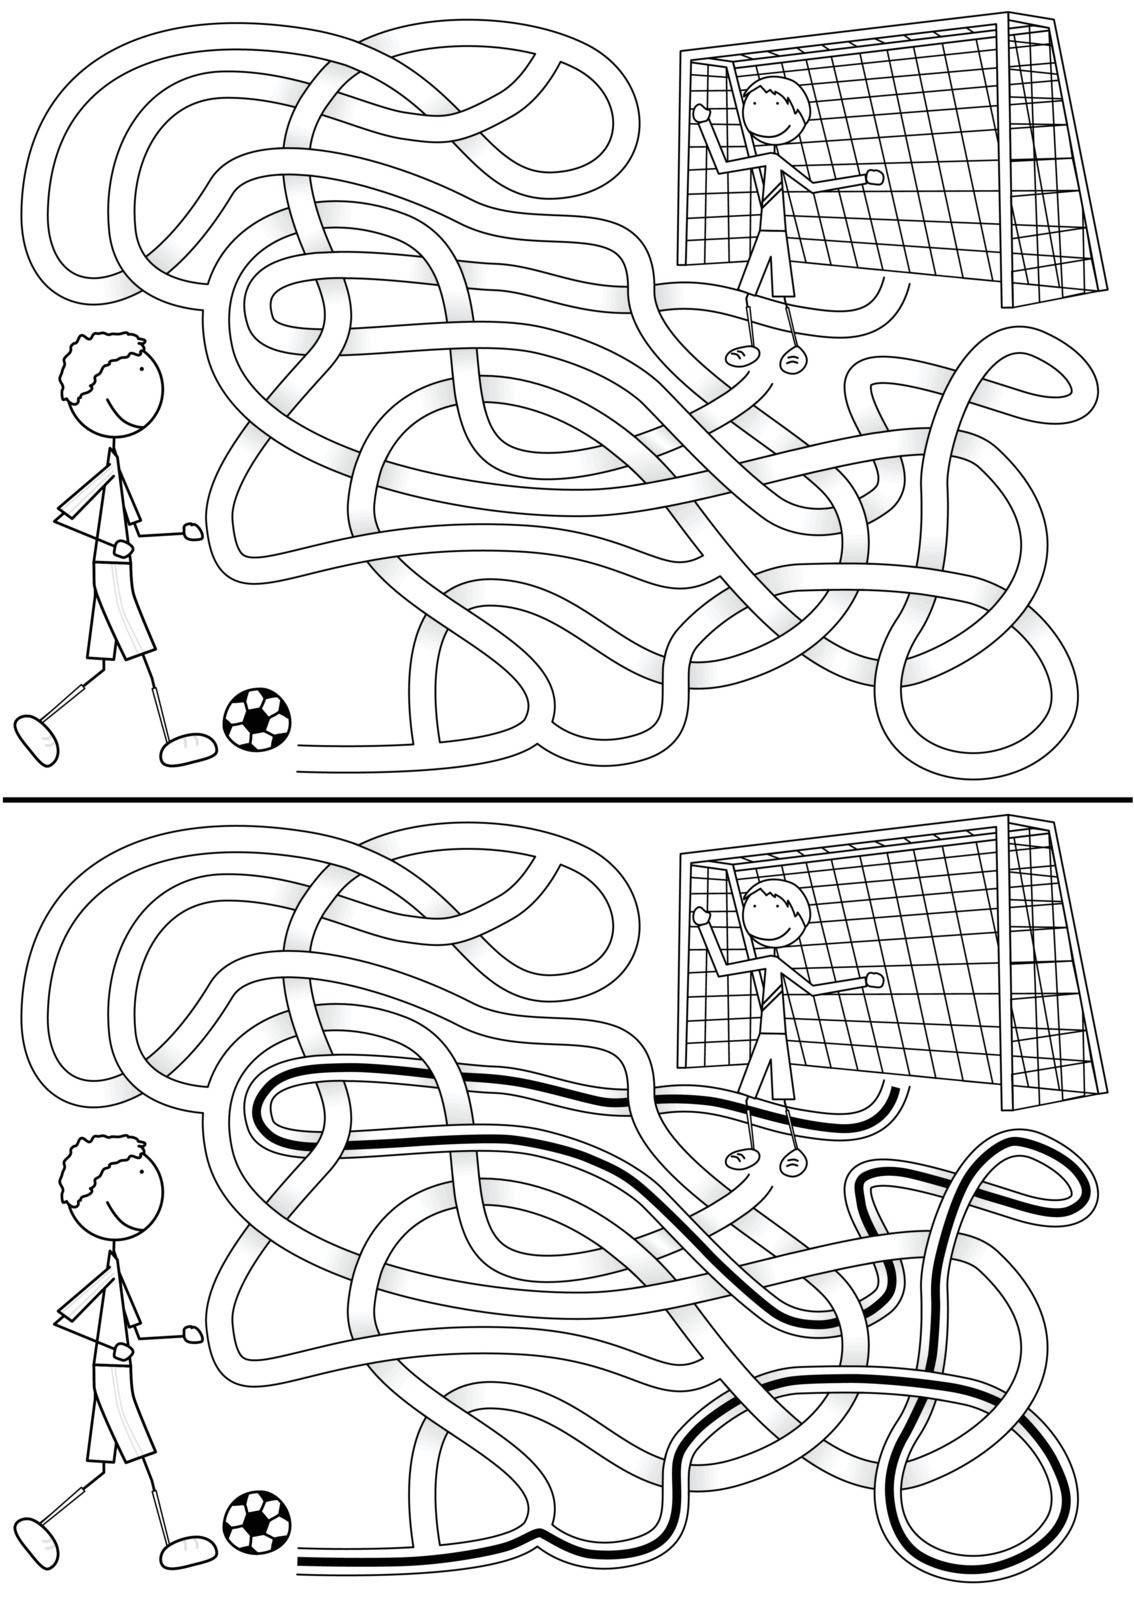 Football maze by nahhan